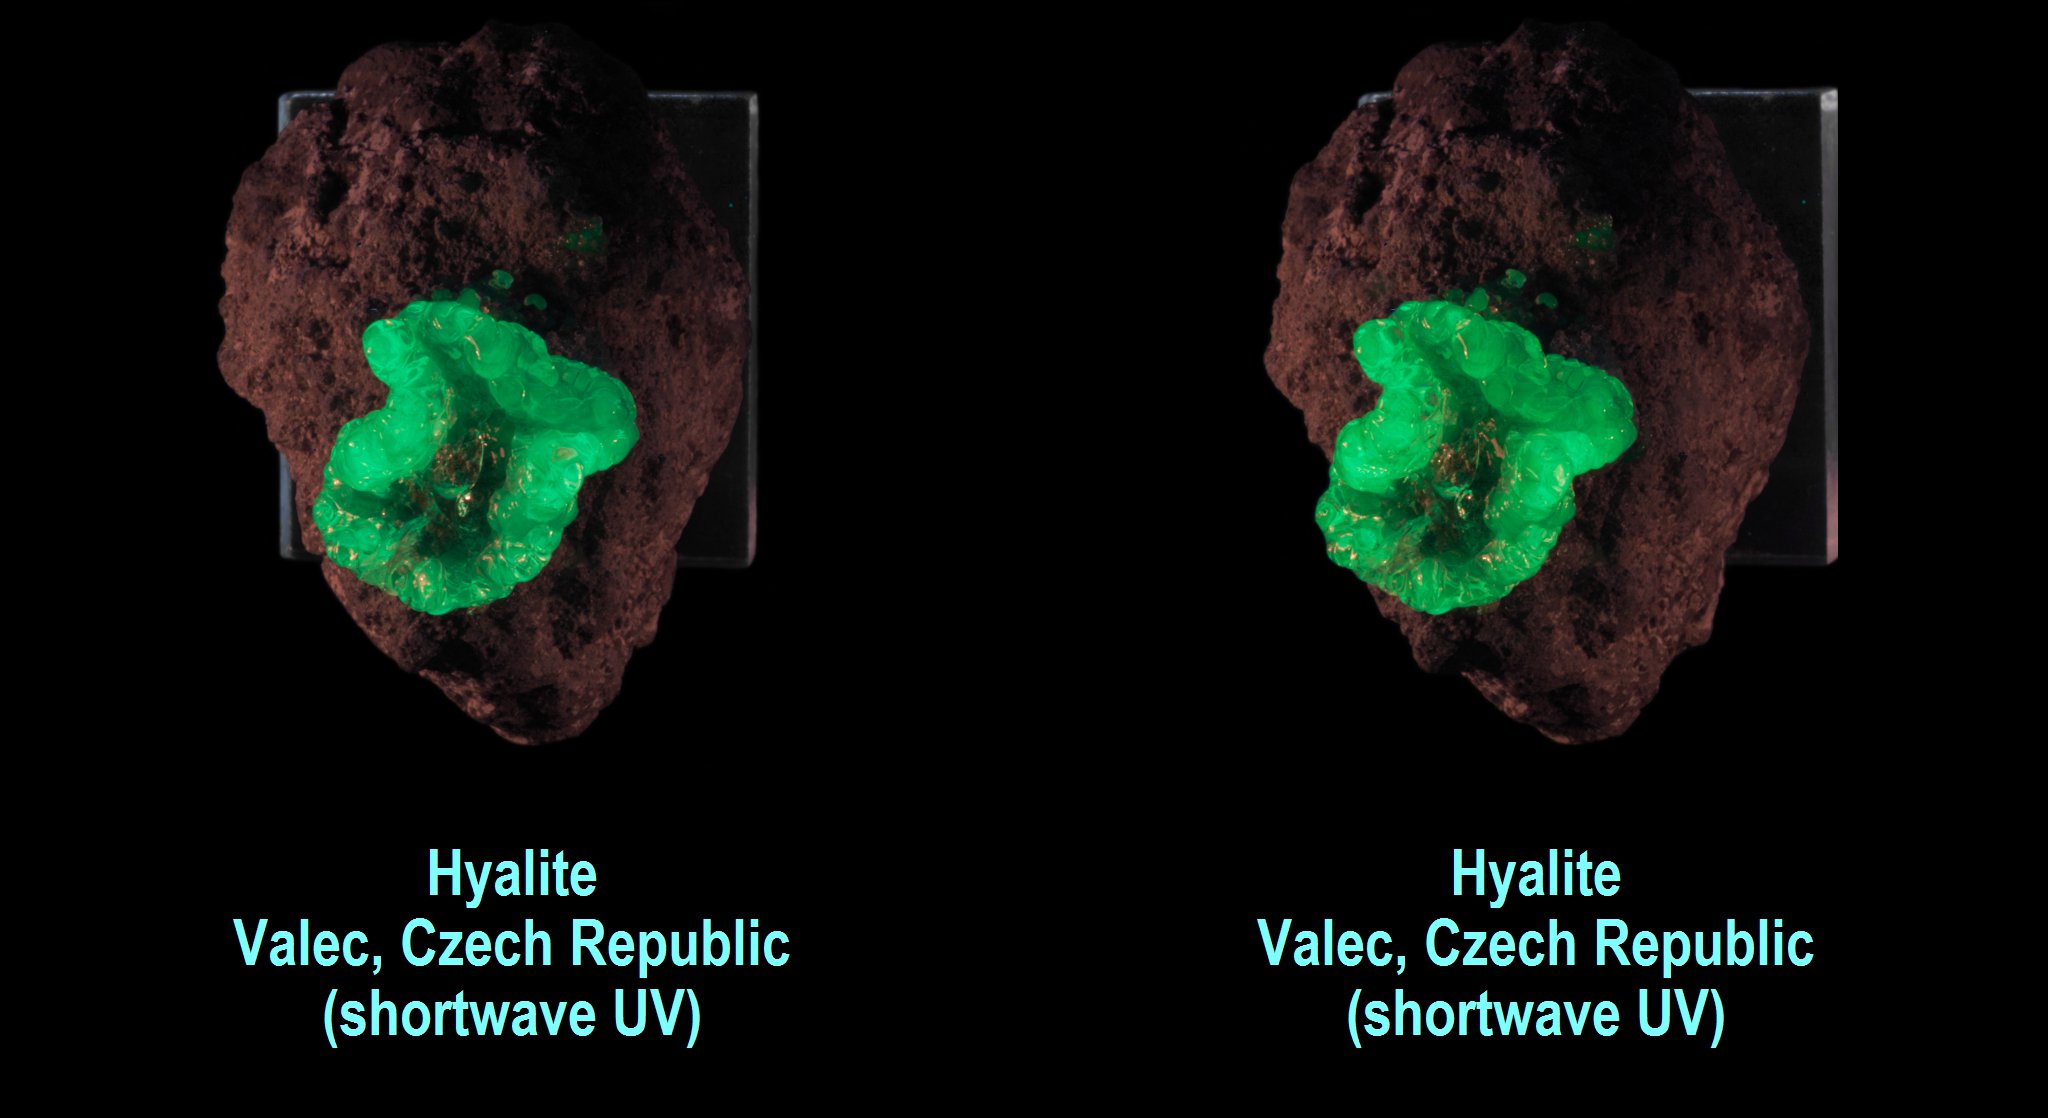 Hyalite - Valec, Czech Republic - green fluorescence (shortwave UV)